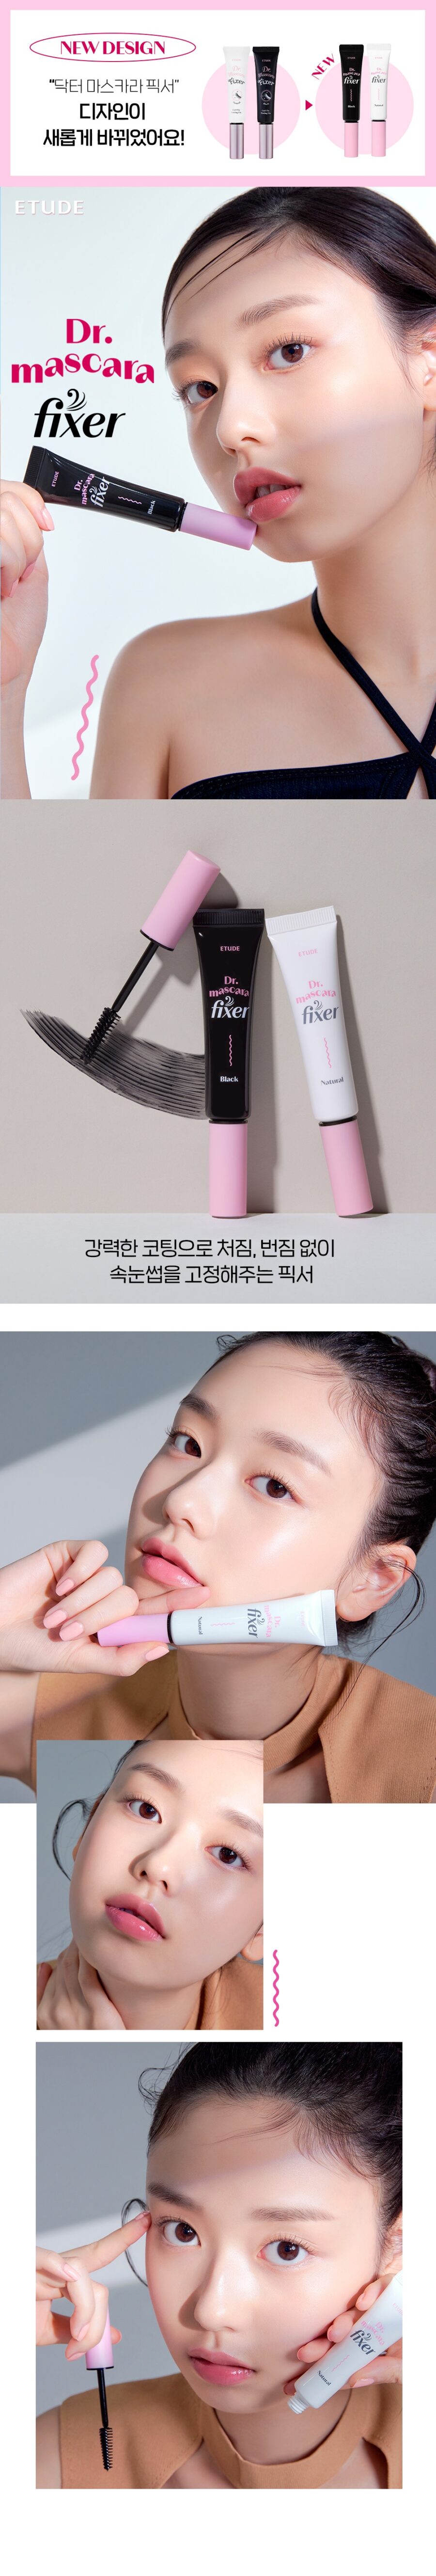 Etude House Dr Mascara Fixer korean skincare product online shop malaysia china india1